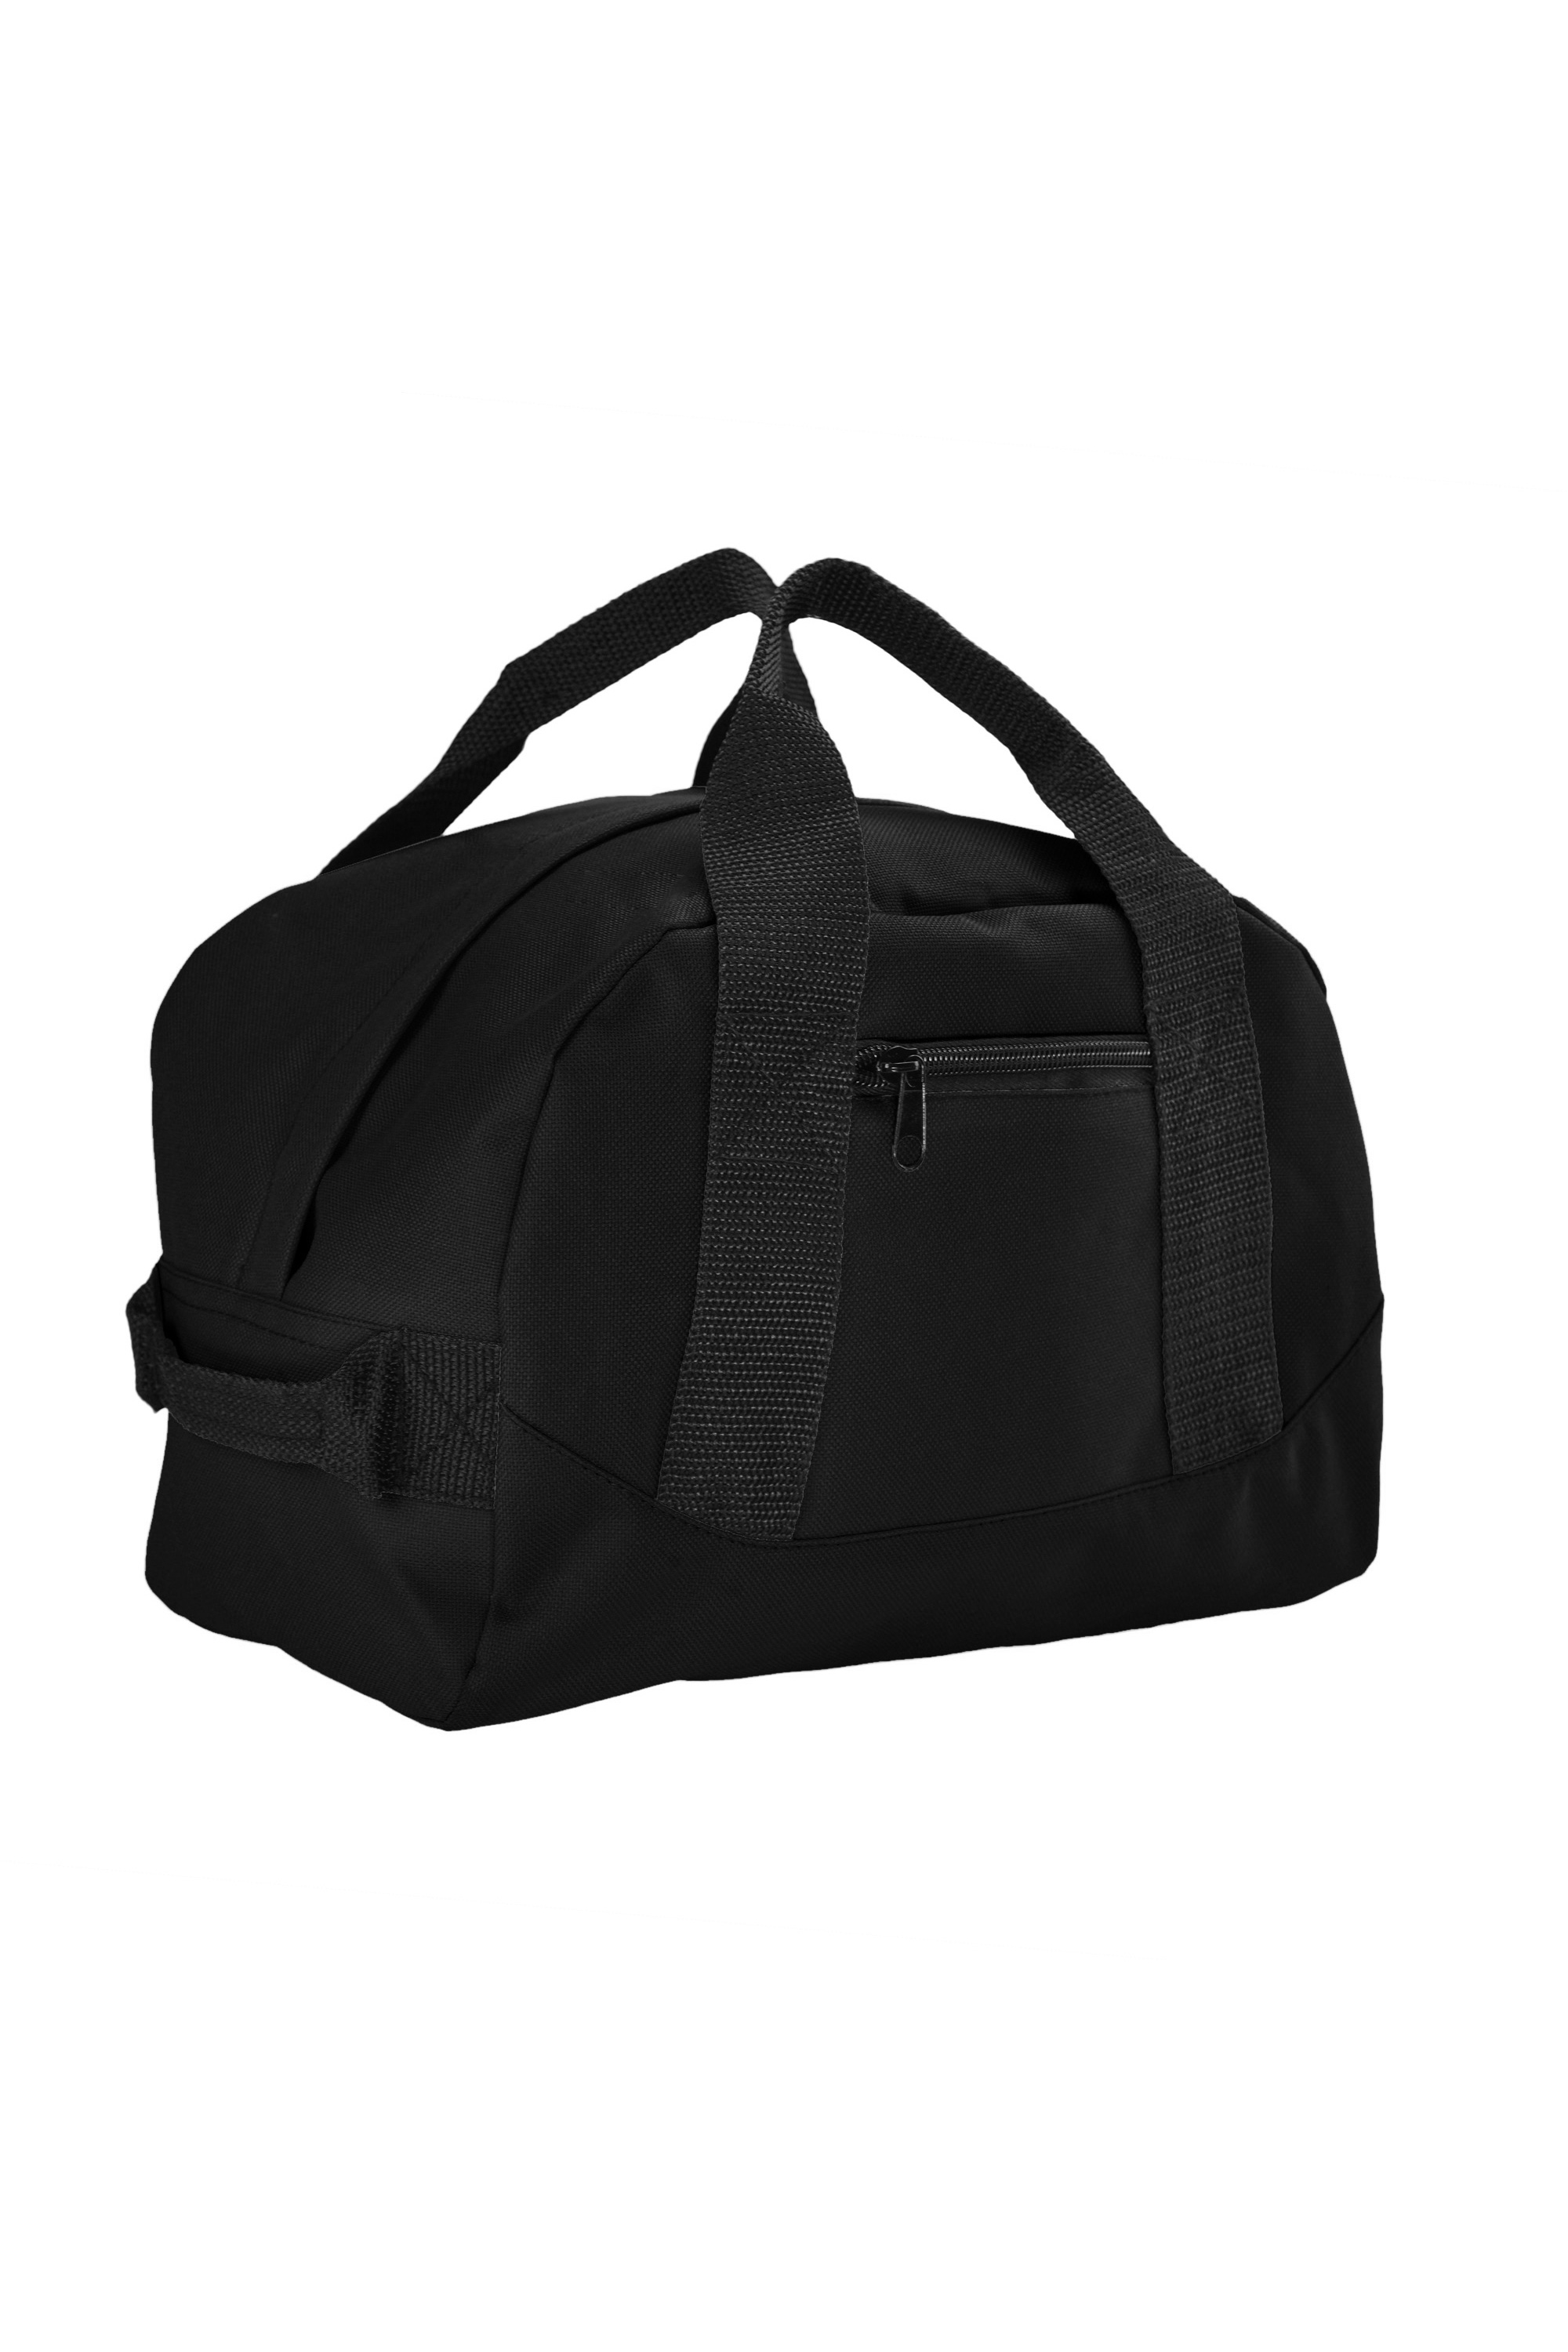 DALIX 12" Mini Duffel Bag Gym Duffle in Black - image 1 of 8